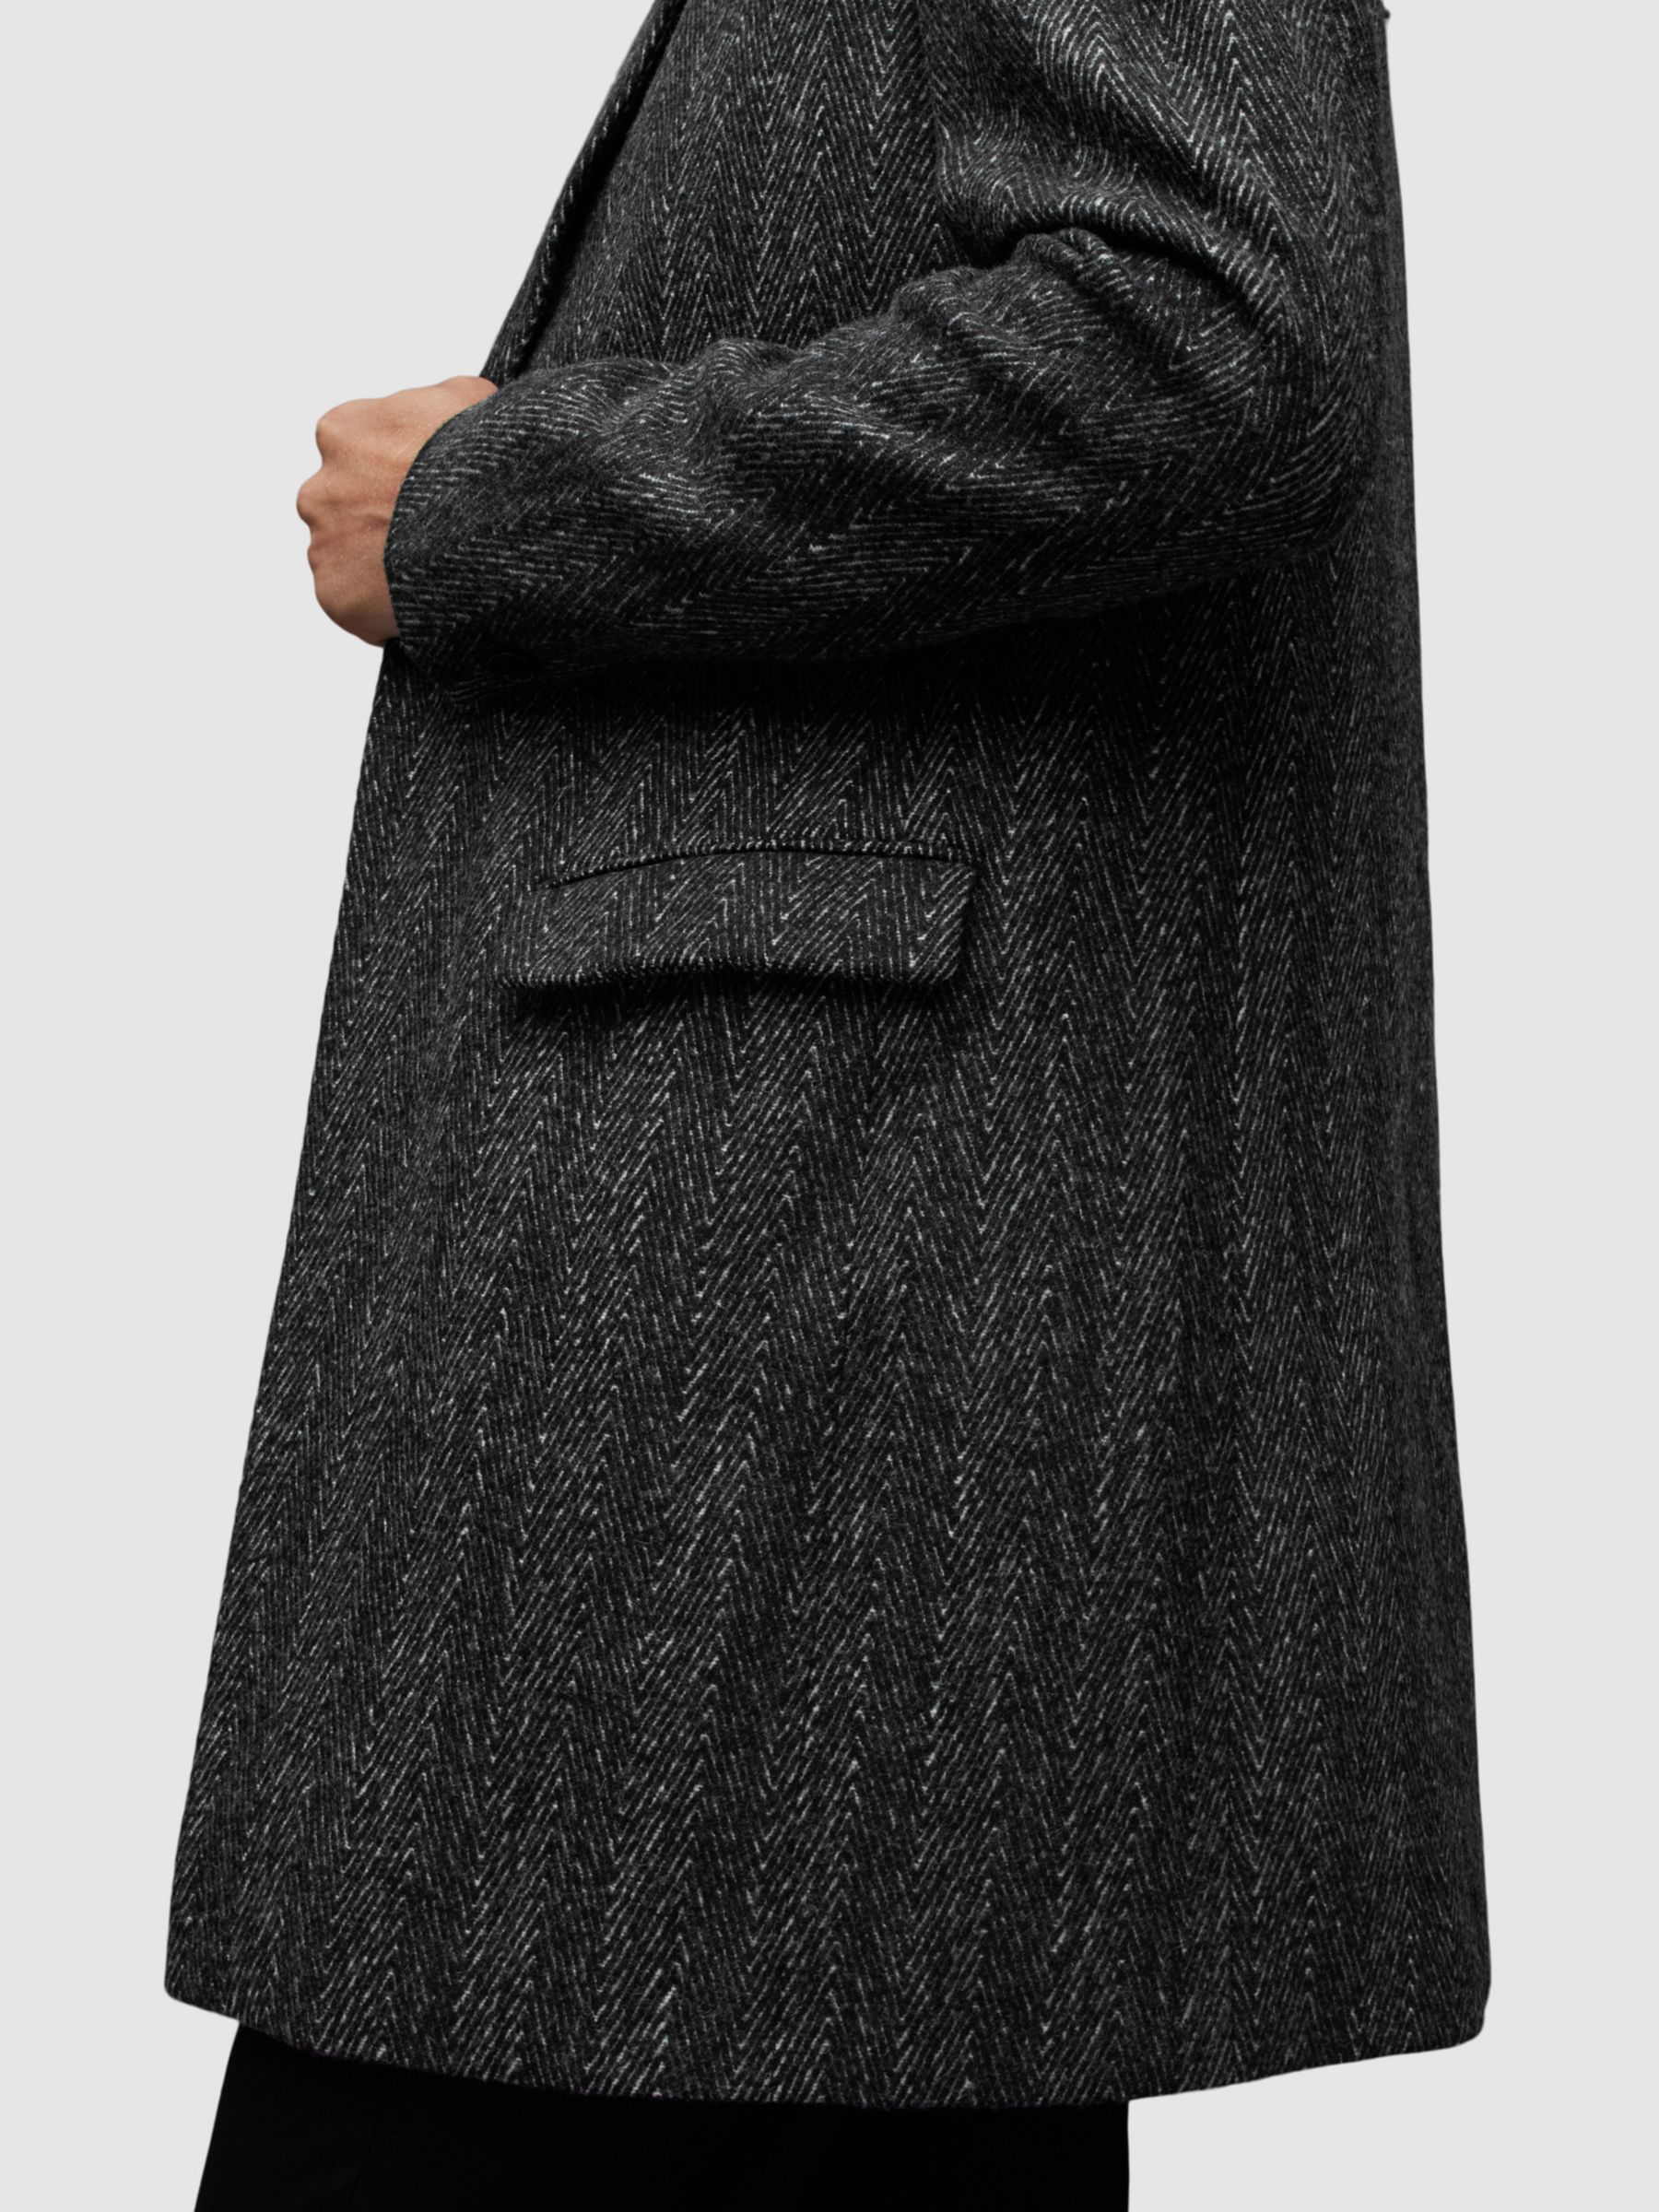 AllSaints Manor Herringbone Wool Coat, Black, 40R